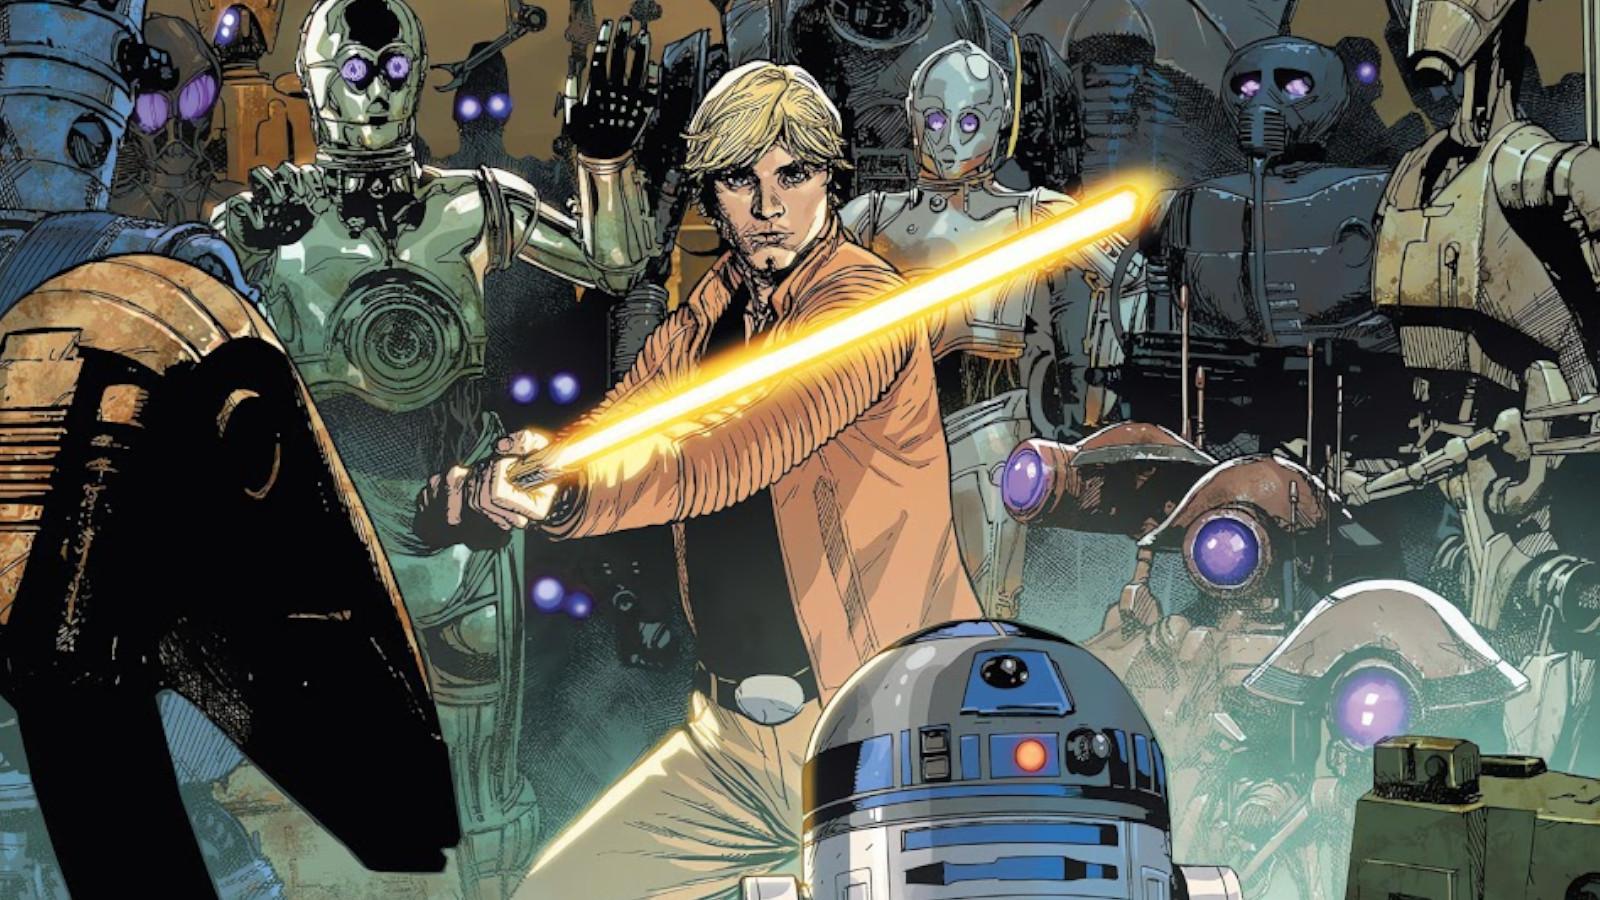 Star Wars Dark Droids 1 cover depicting Luke Skywalker in front of droids.